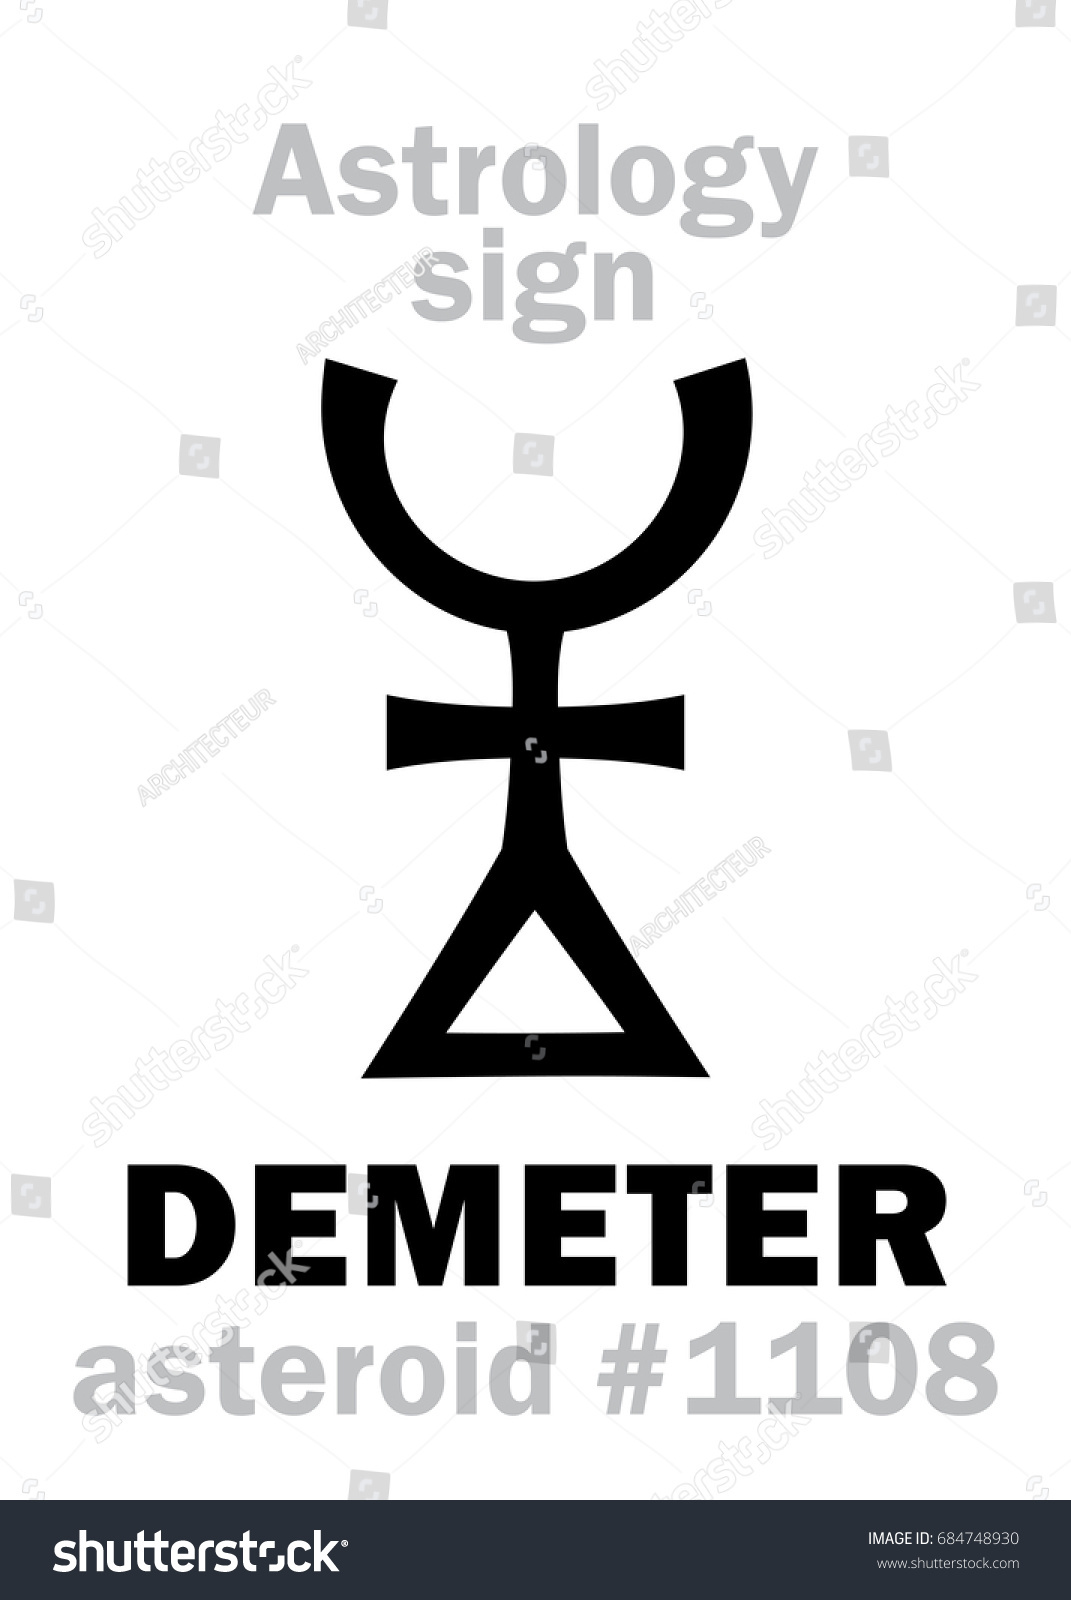 Astrology Alphabet Demeter Asteroid 1108 Hieroglyphics Stock Vector ...